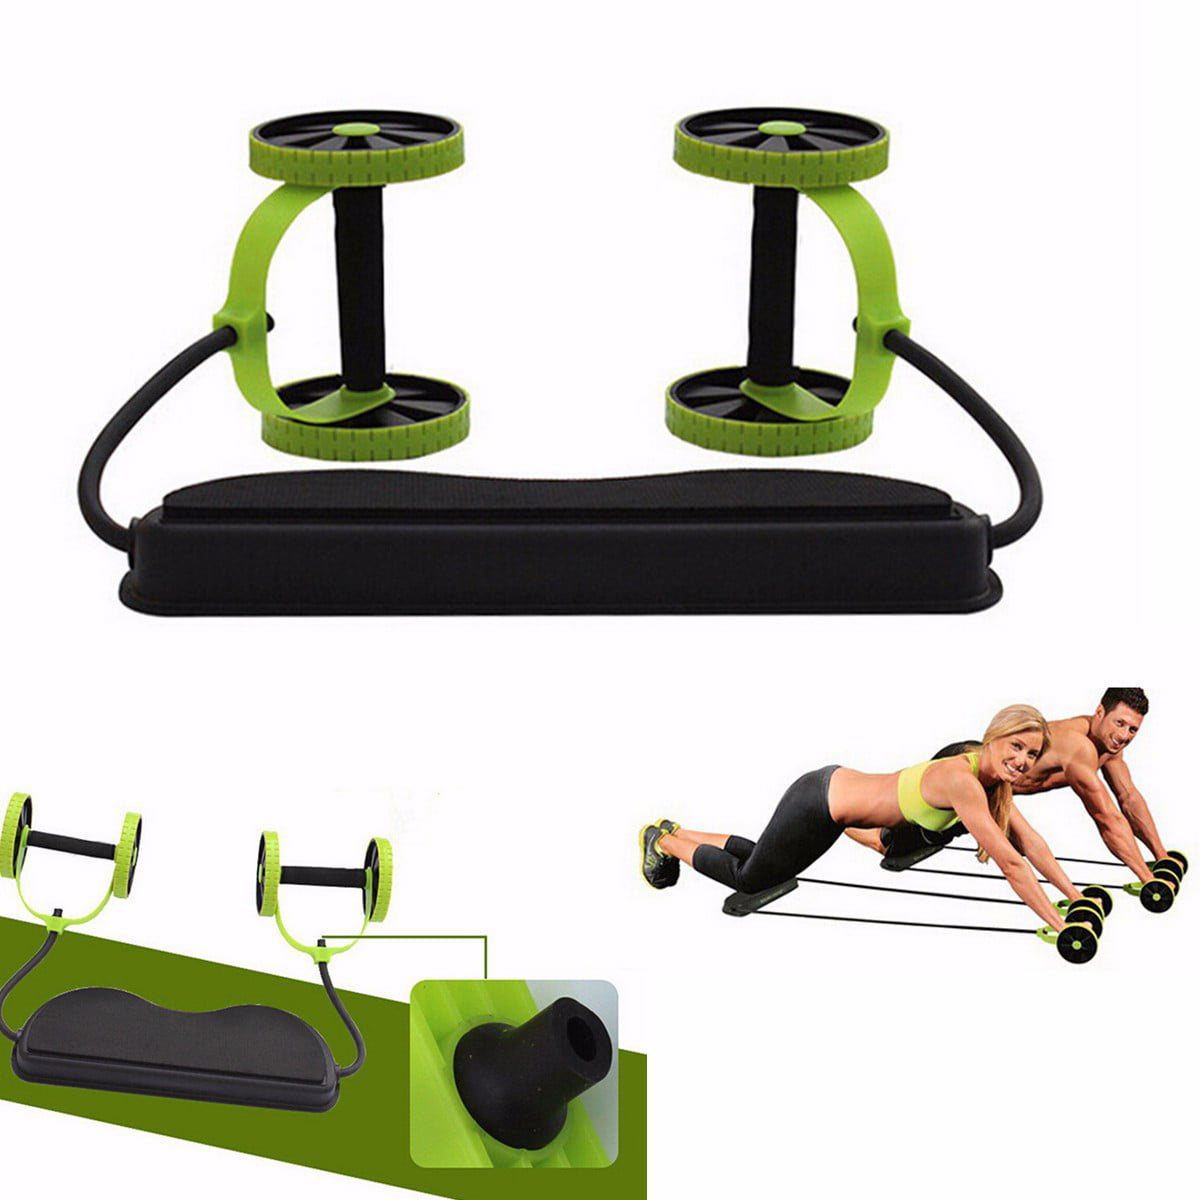 Abdominal Core Strength Gym Fitness Training Roller Viavito Ab Exercise Wheel 